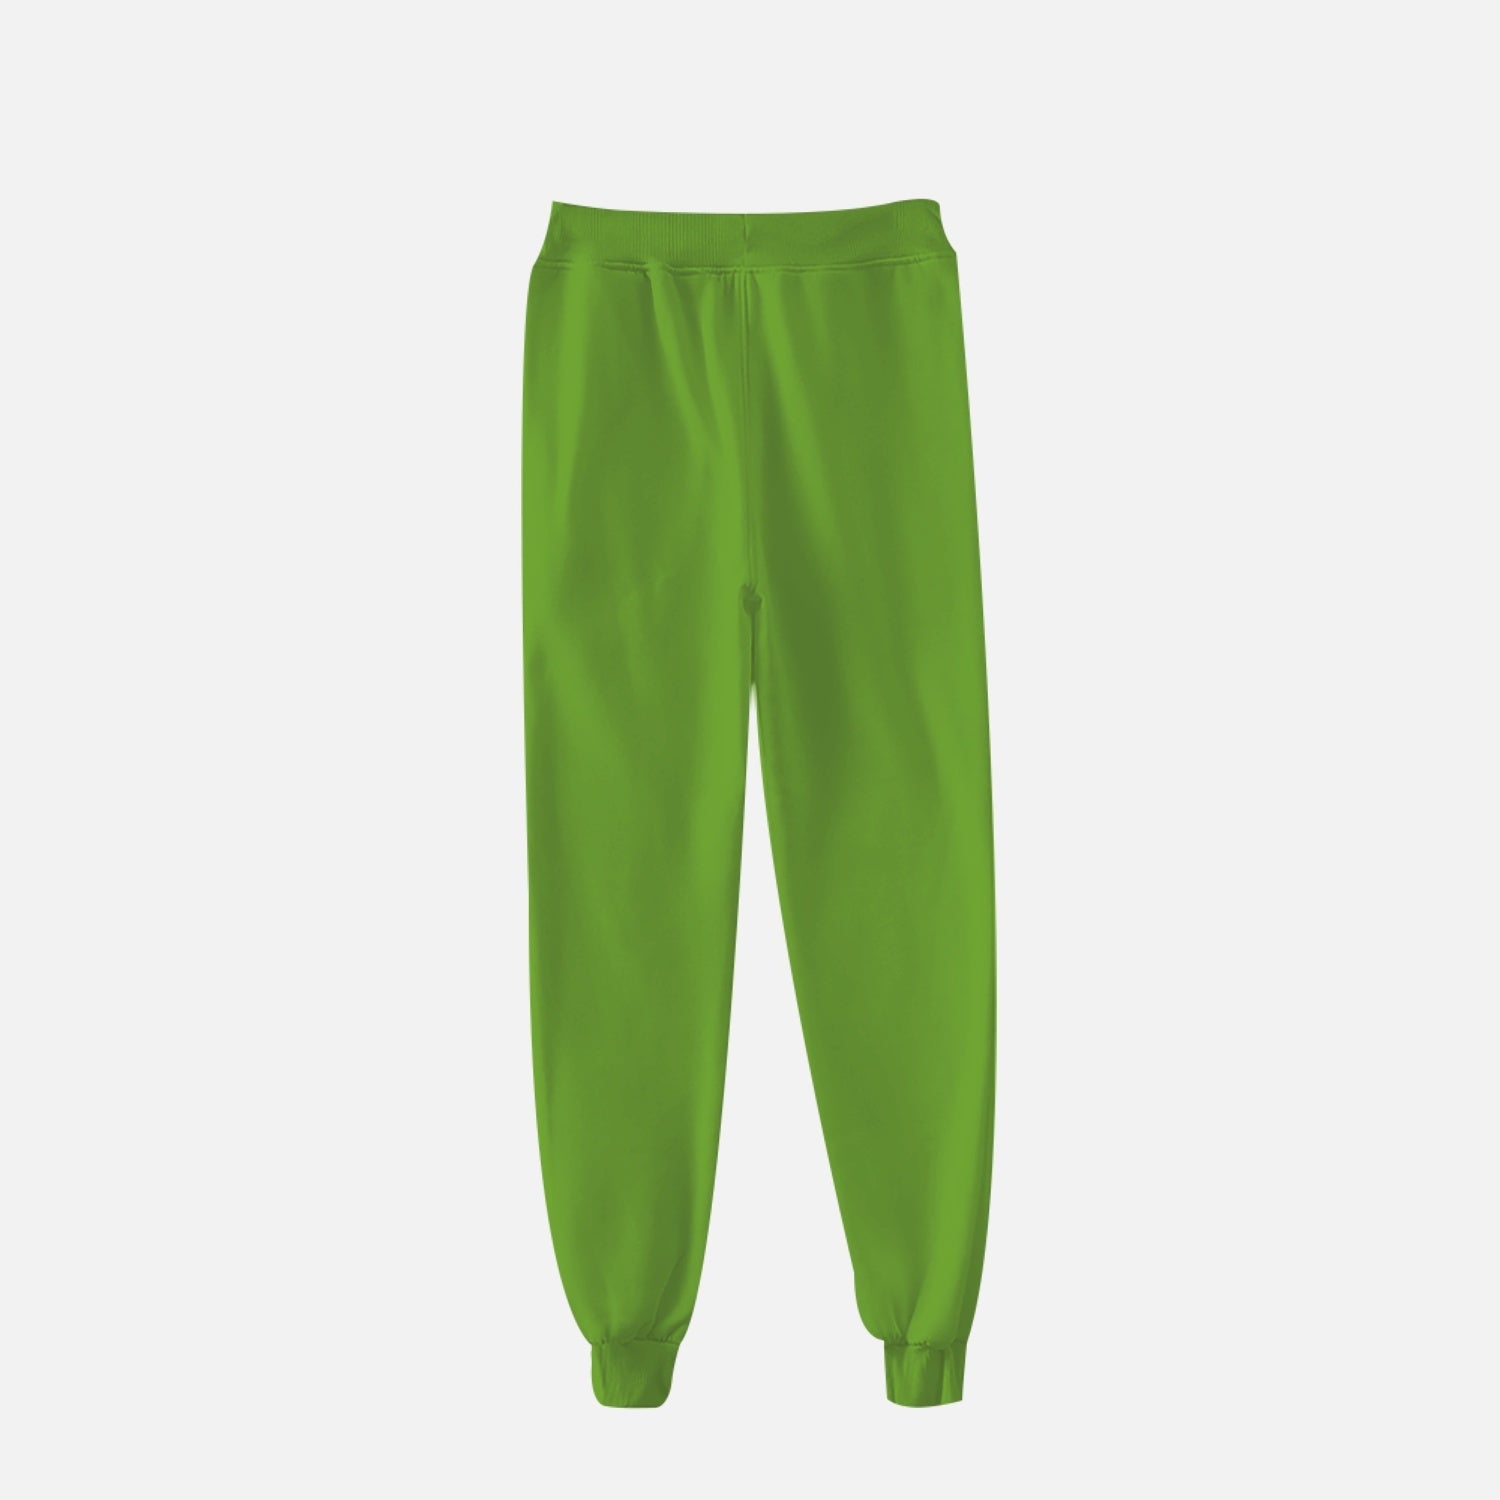 THe Green Heart Chacra. Mid-Rise Pocket Sweatpants, by Sensus Studio Design